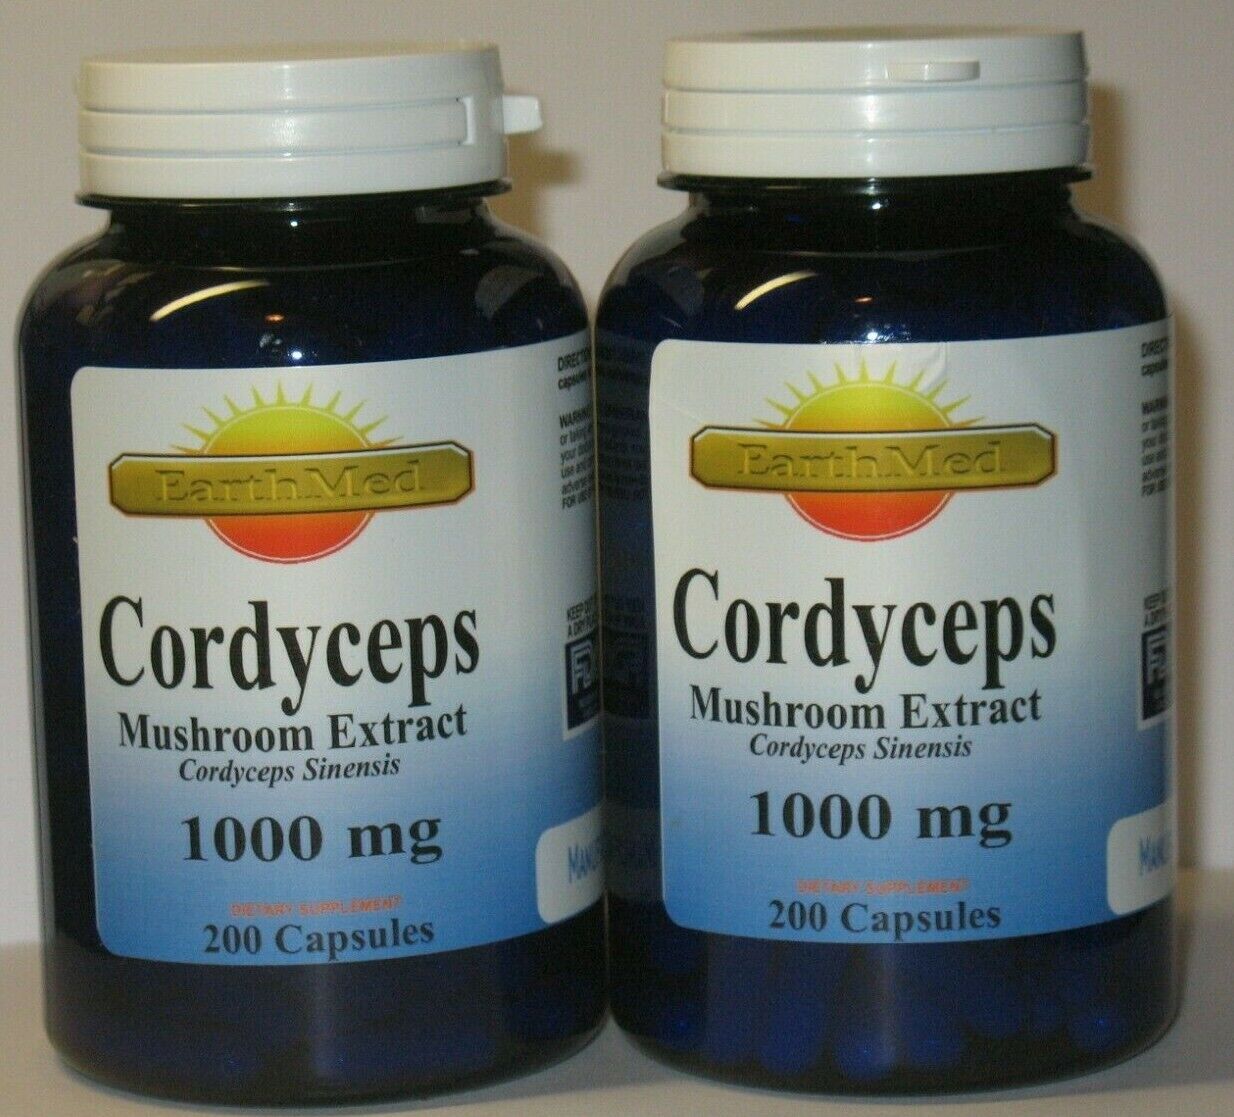 2X Cordyceps Sinensis Mushroom  1000 mg/Serving  400 Capsules Total   Fresh!  EarthMed